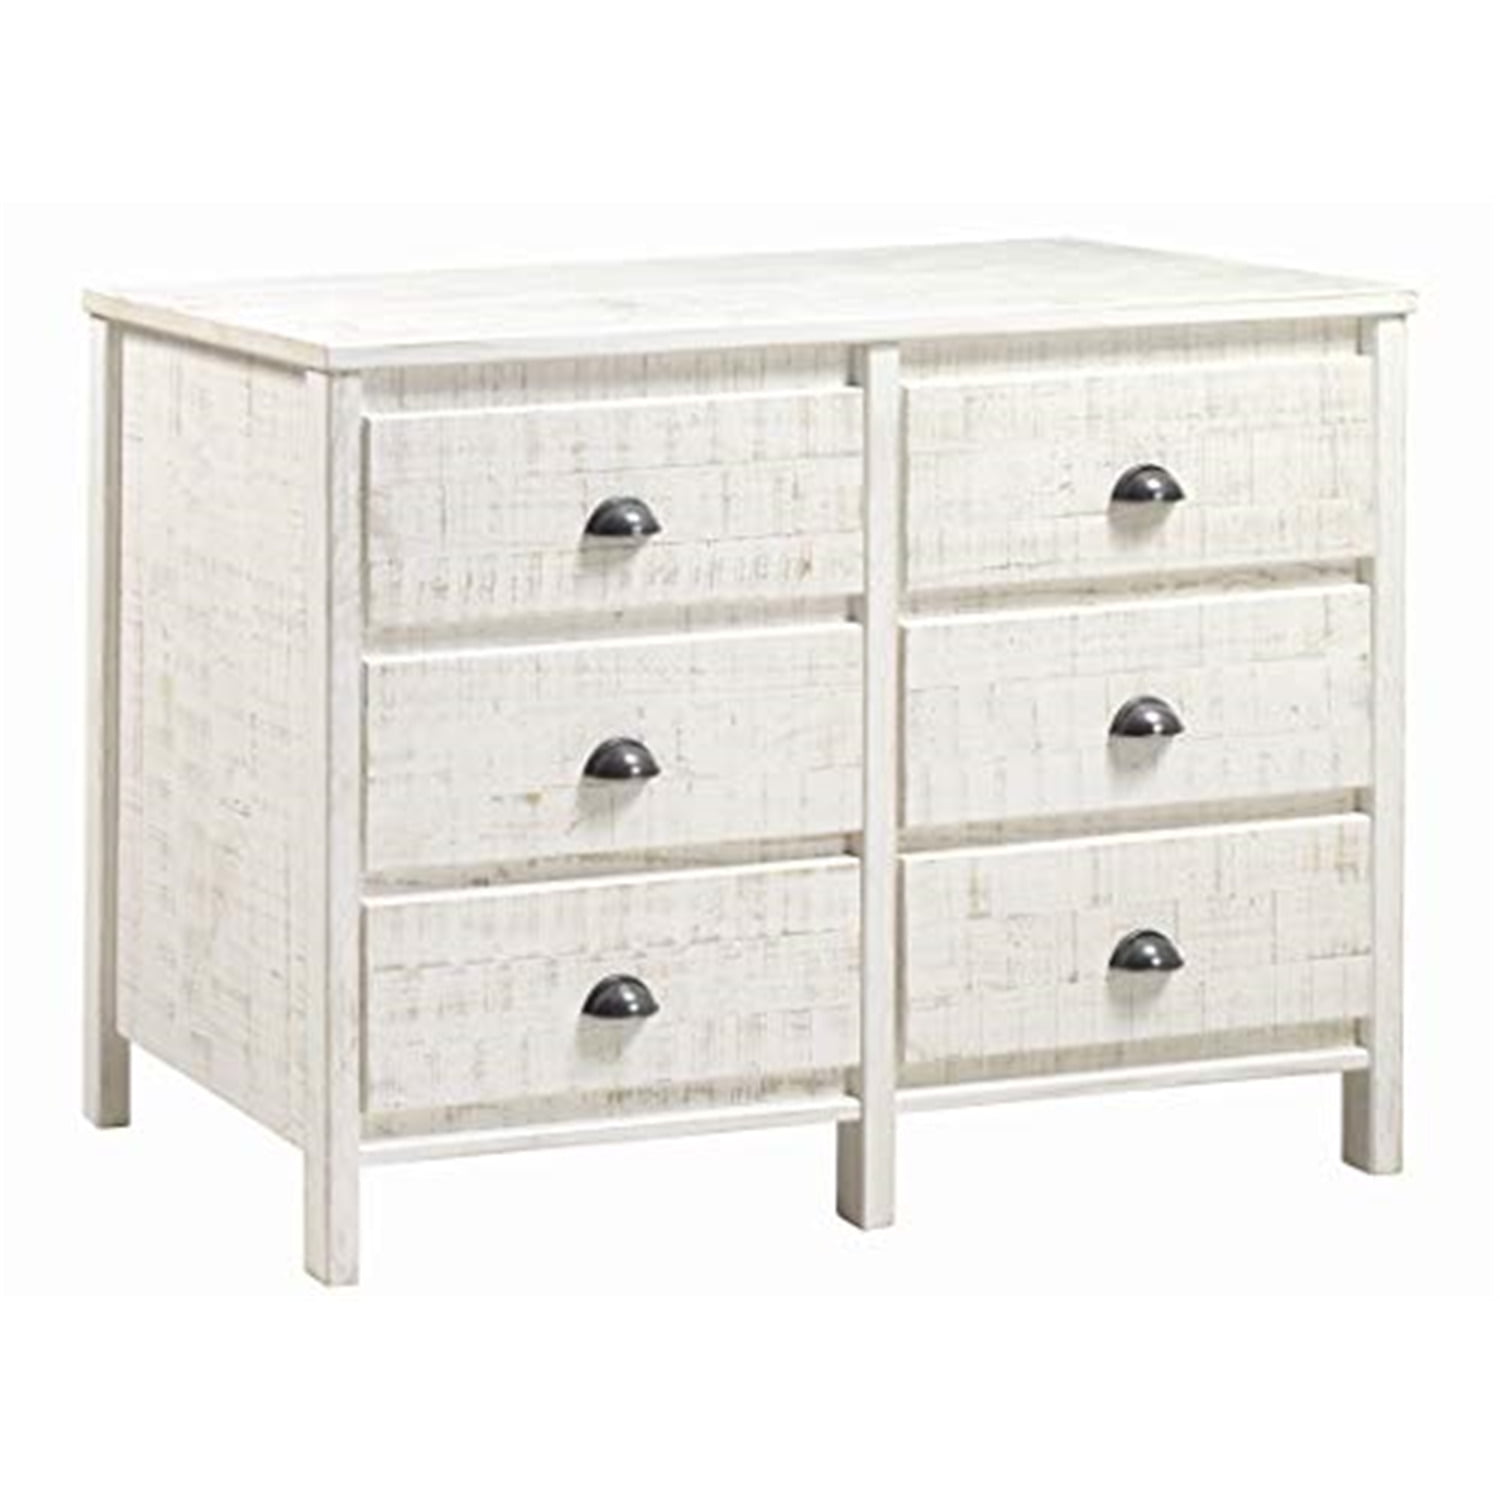 Picture of EcoFlex Furniture BJ409 Baja Six Drawer Dresser - Shabby White